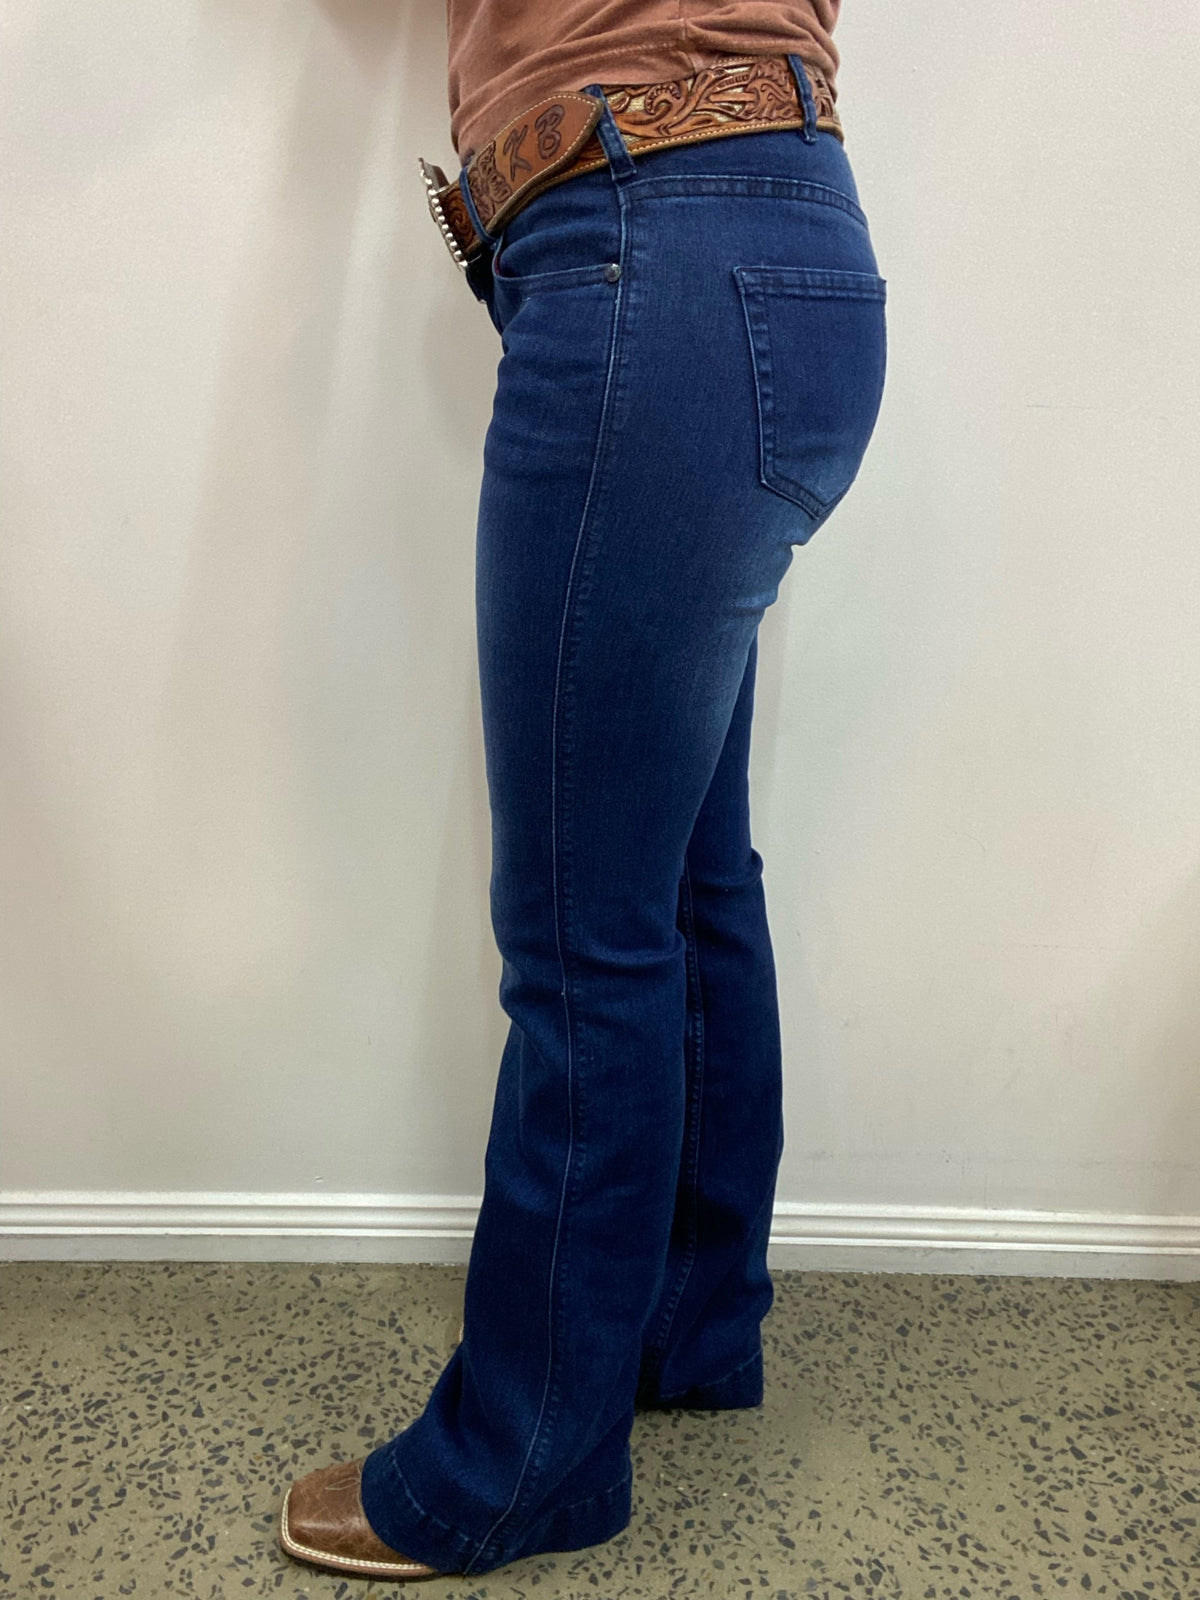 Kensie Jeans Light Wash High Rise Skinny Jeans size - Depop